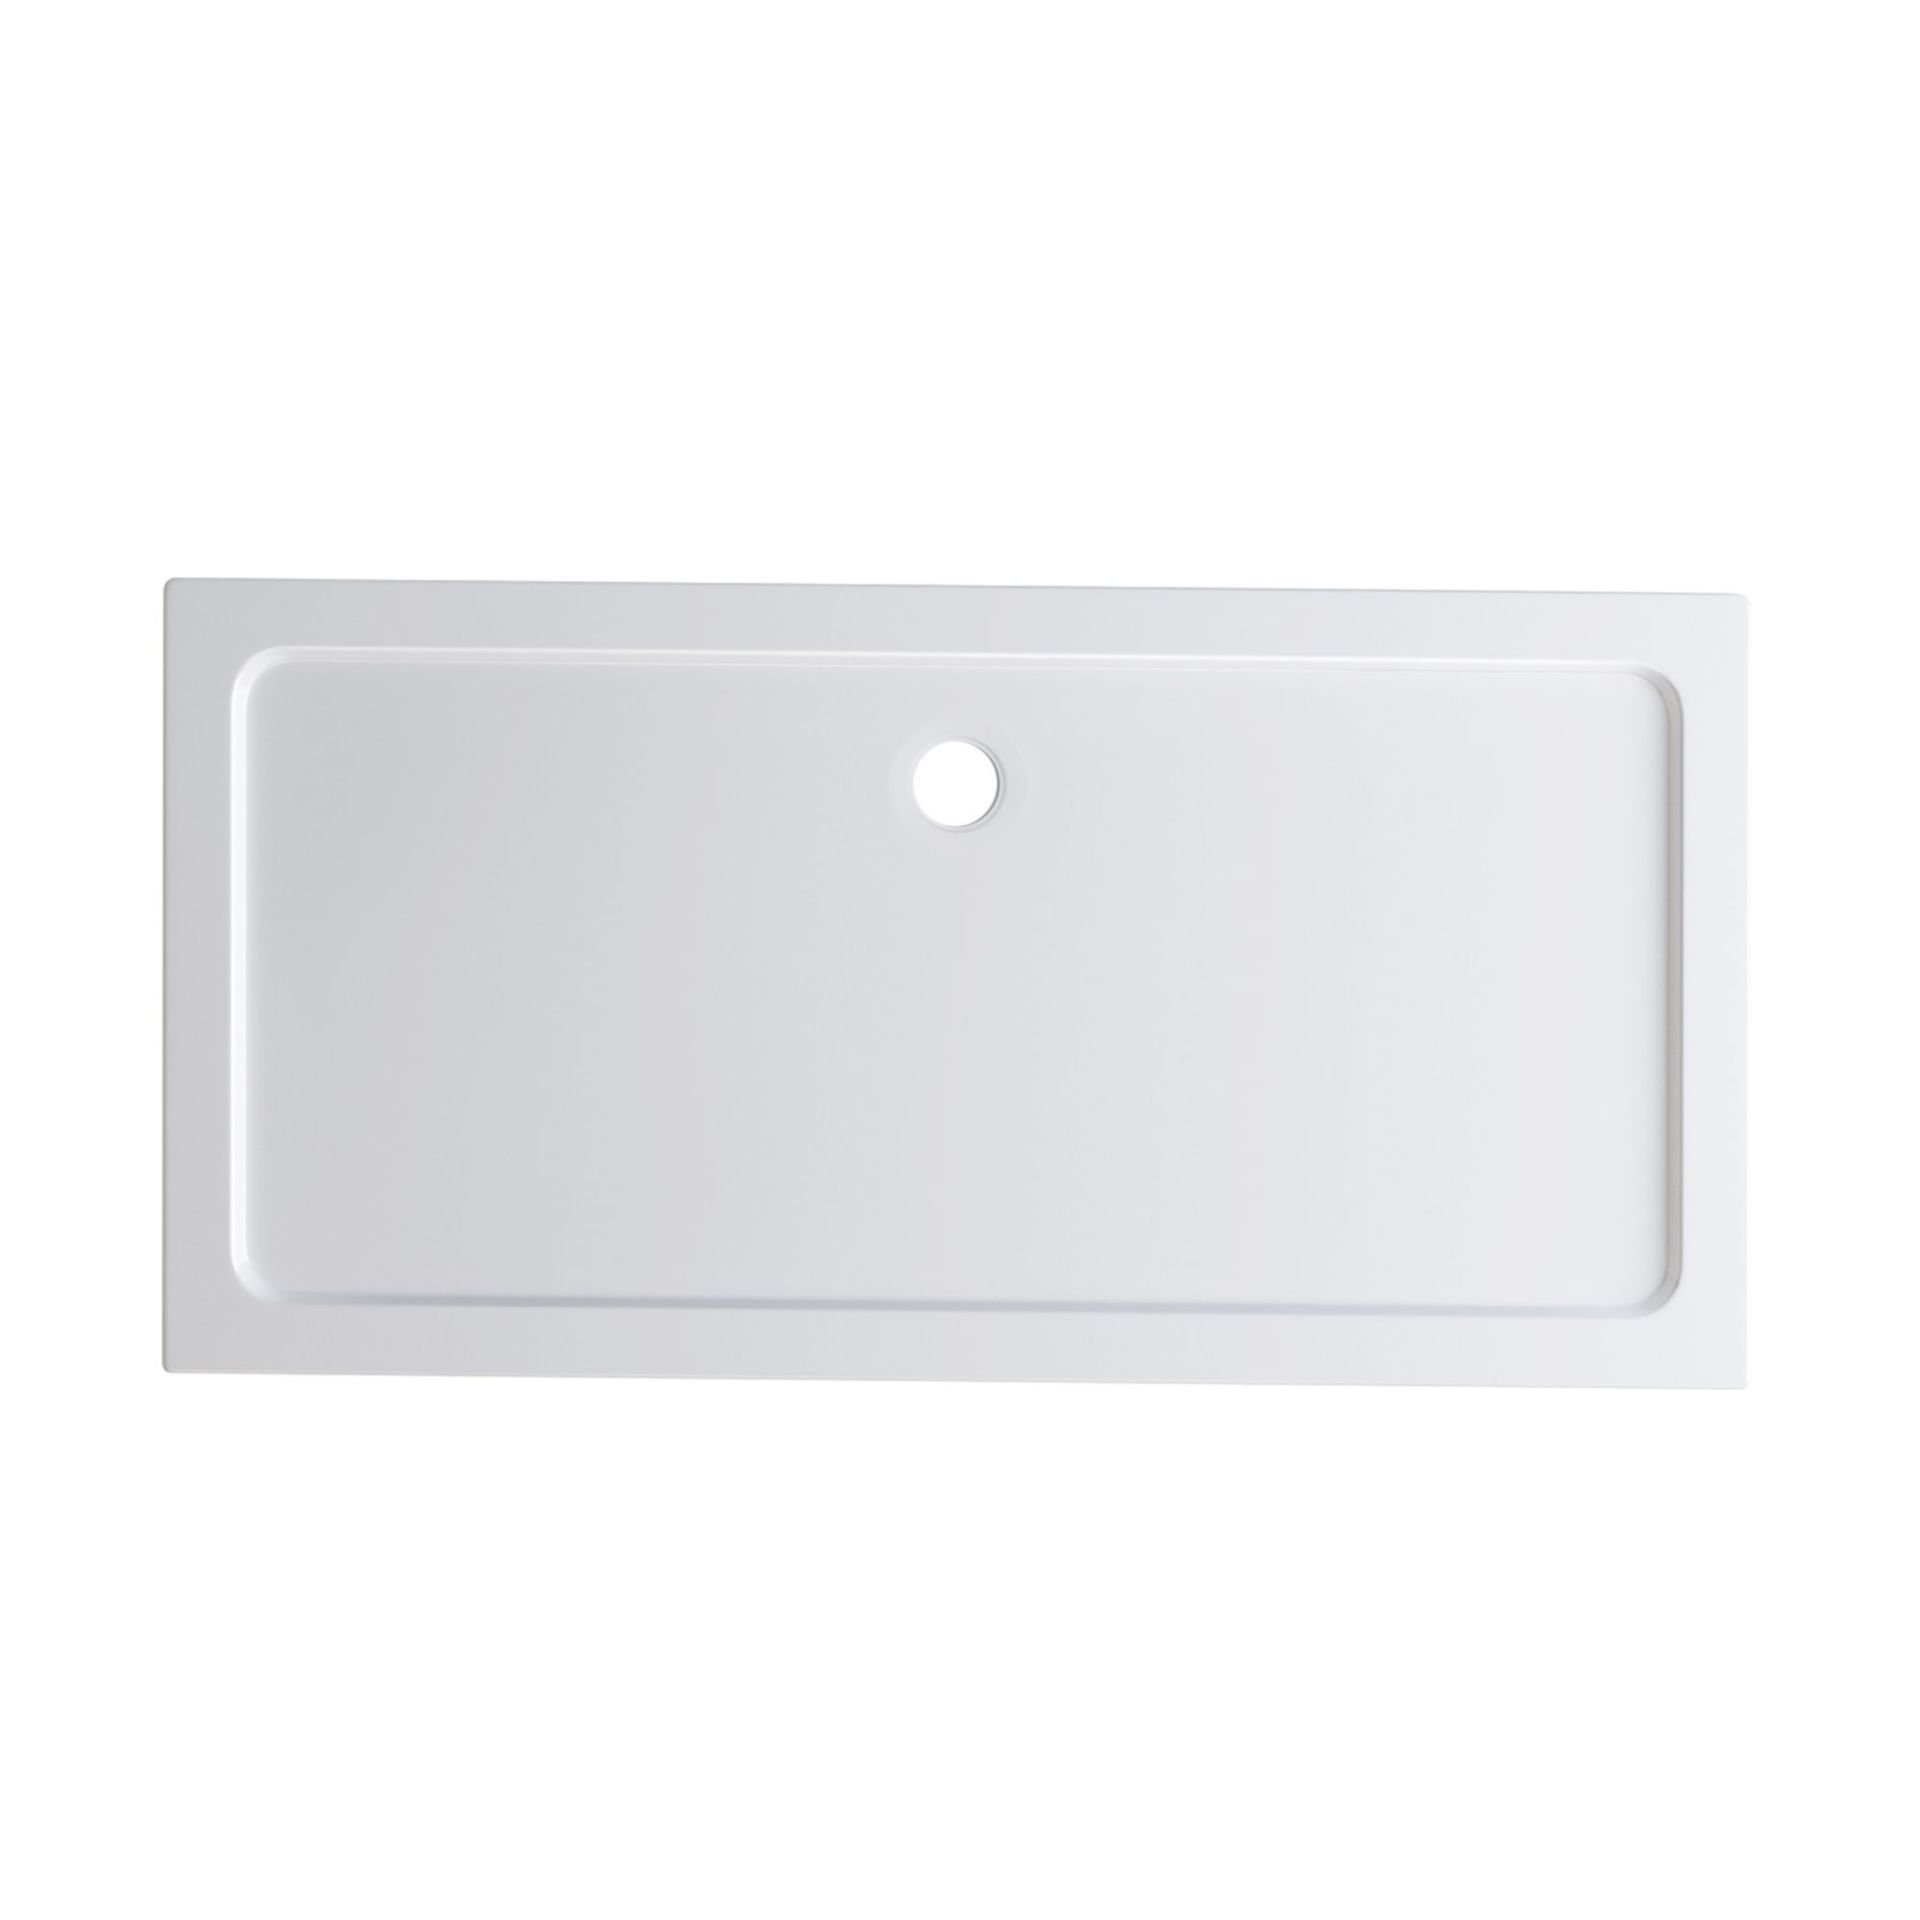 (VN178) 1700x800mm Rectangular Ultra Slim Stone Shower Tray. Low profile ultra slim design Gel